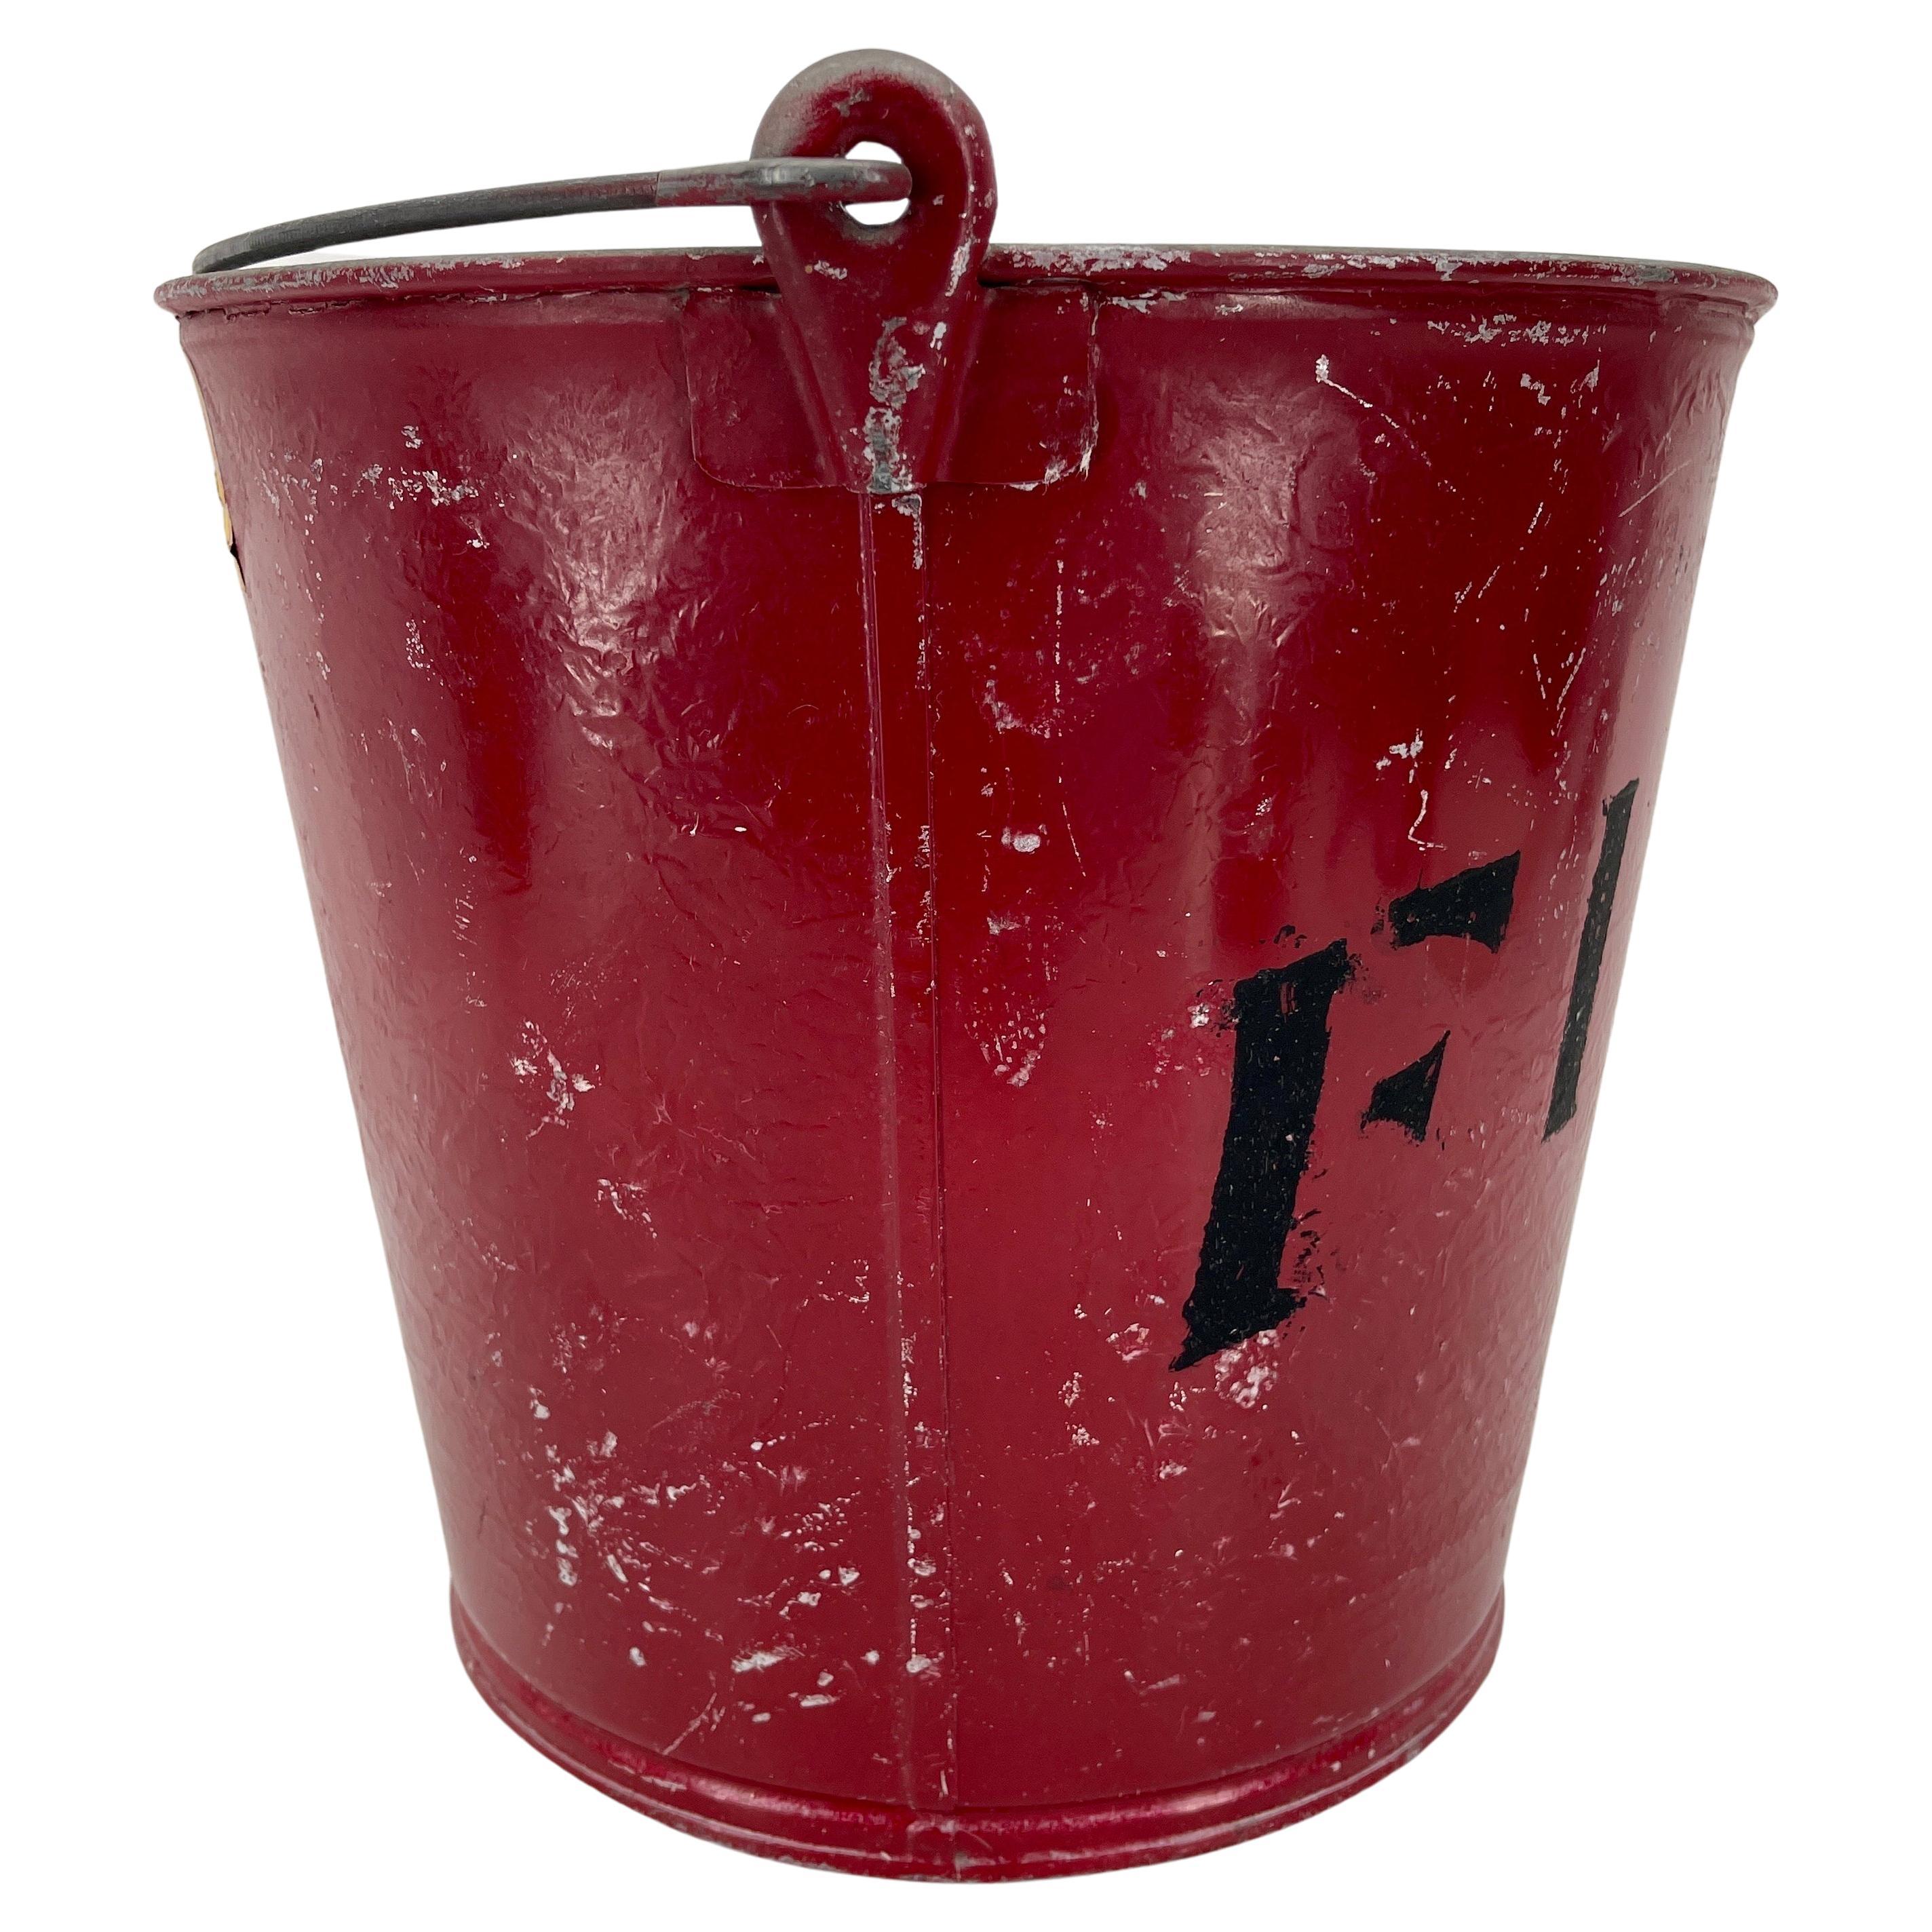 Industrial Red Vintage Metal Fire Bucket Waste Basket or Trash Can